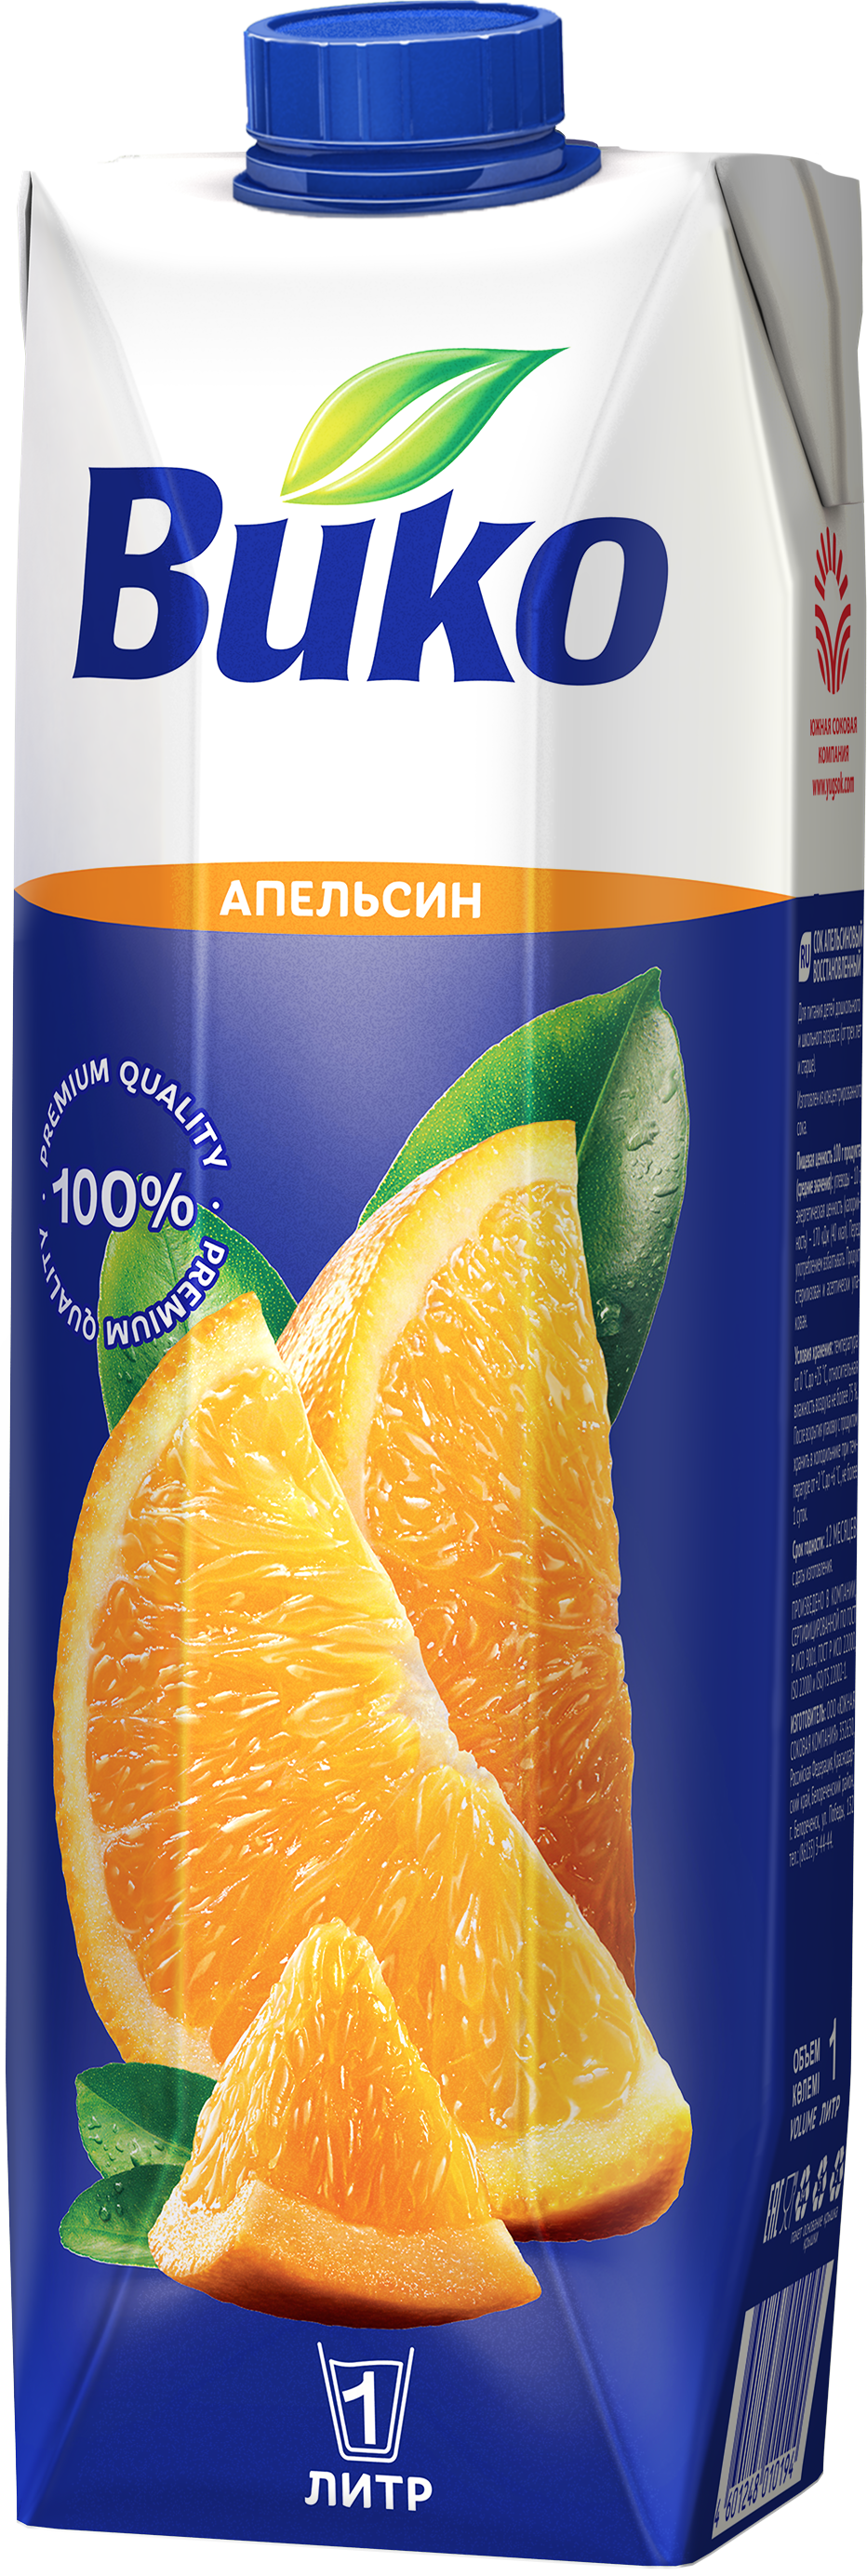 Сок ВИКО Апельсиновый без сахара 1 л х 6 шт. - фото 6